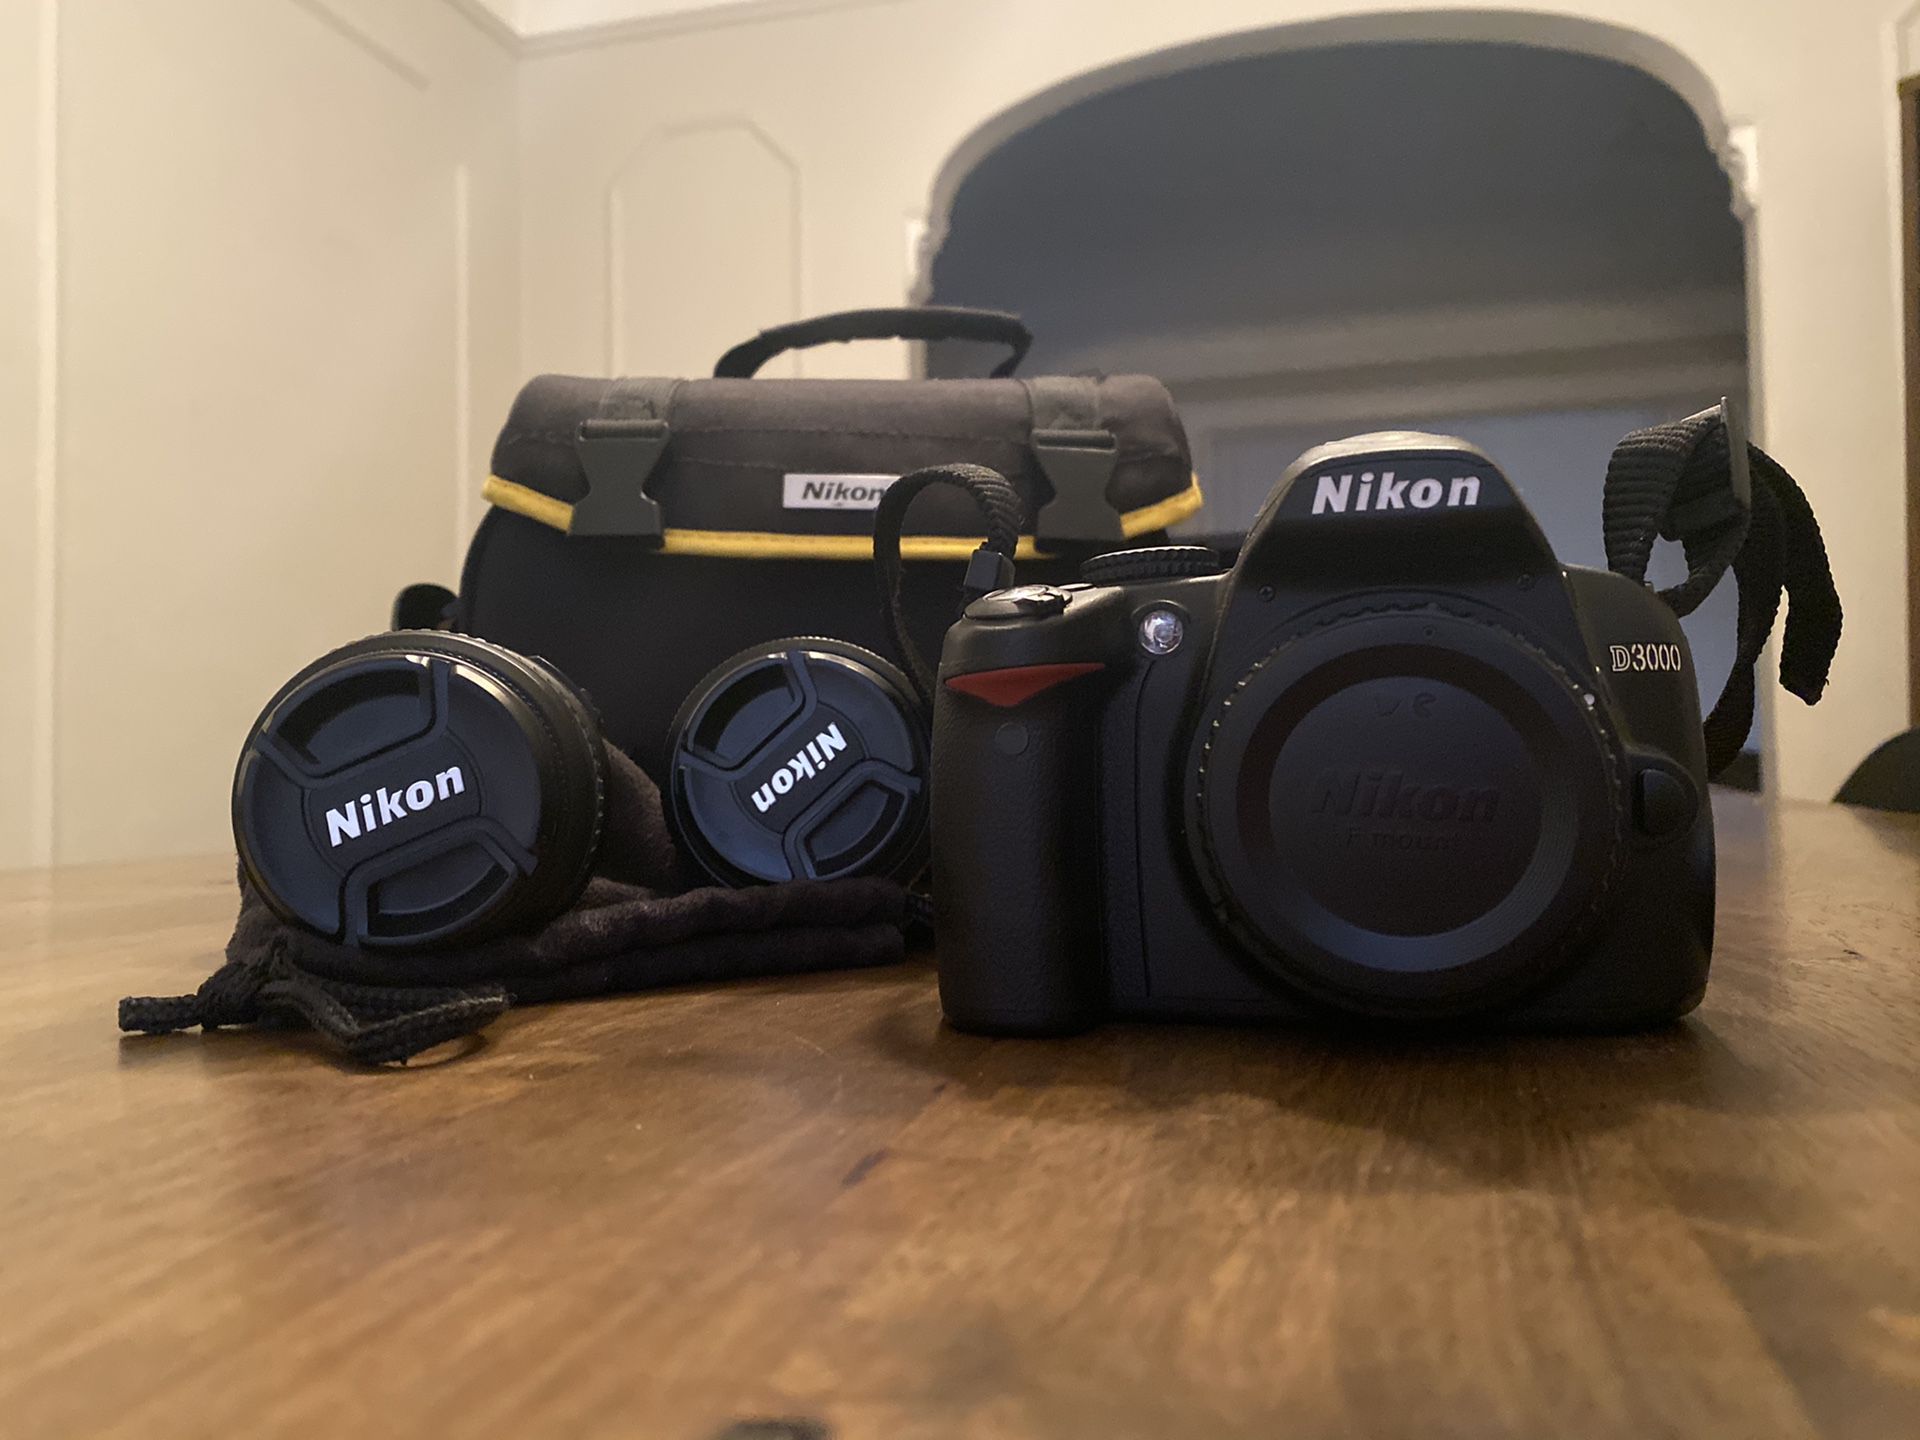 Nikon D3000 with 2 Lens Kit